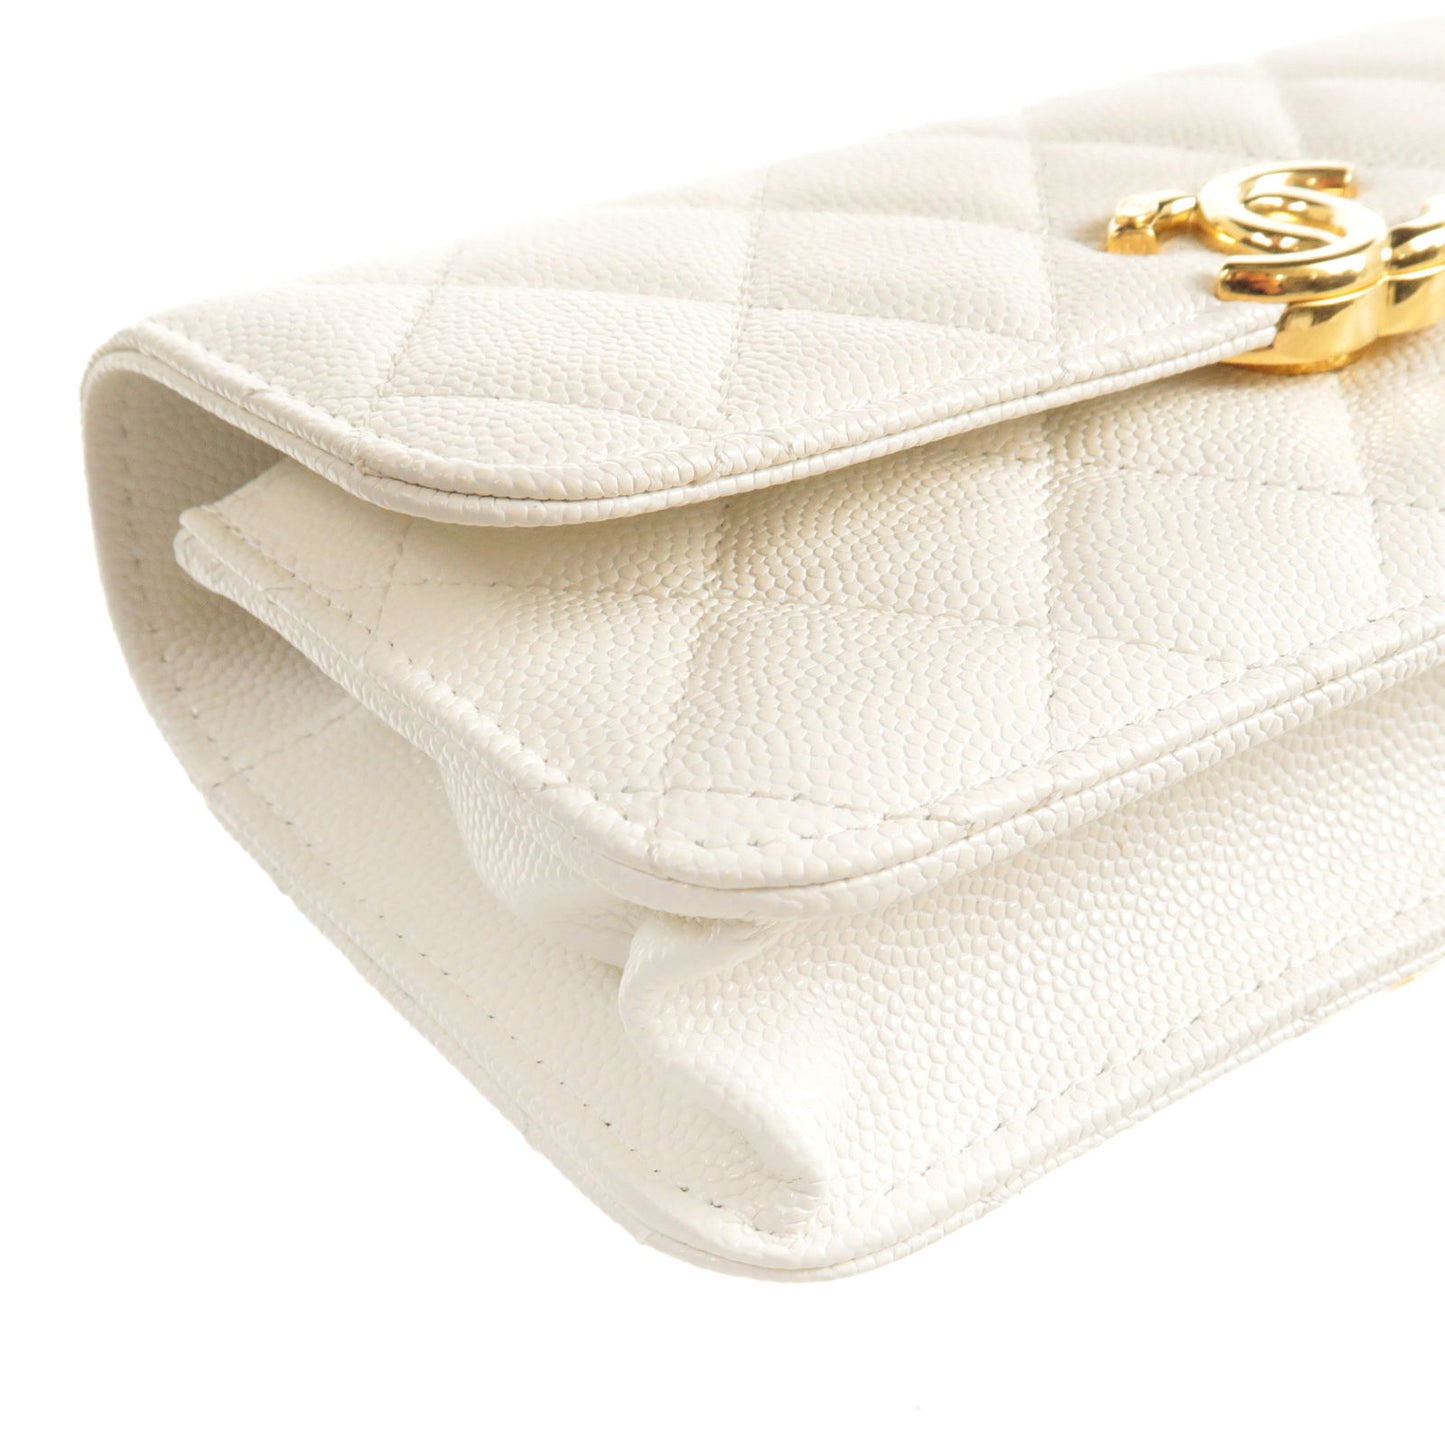 CHANEL Matelasee Caviar Skin 2Way Chain Shoulder Bag White